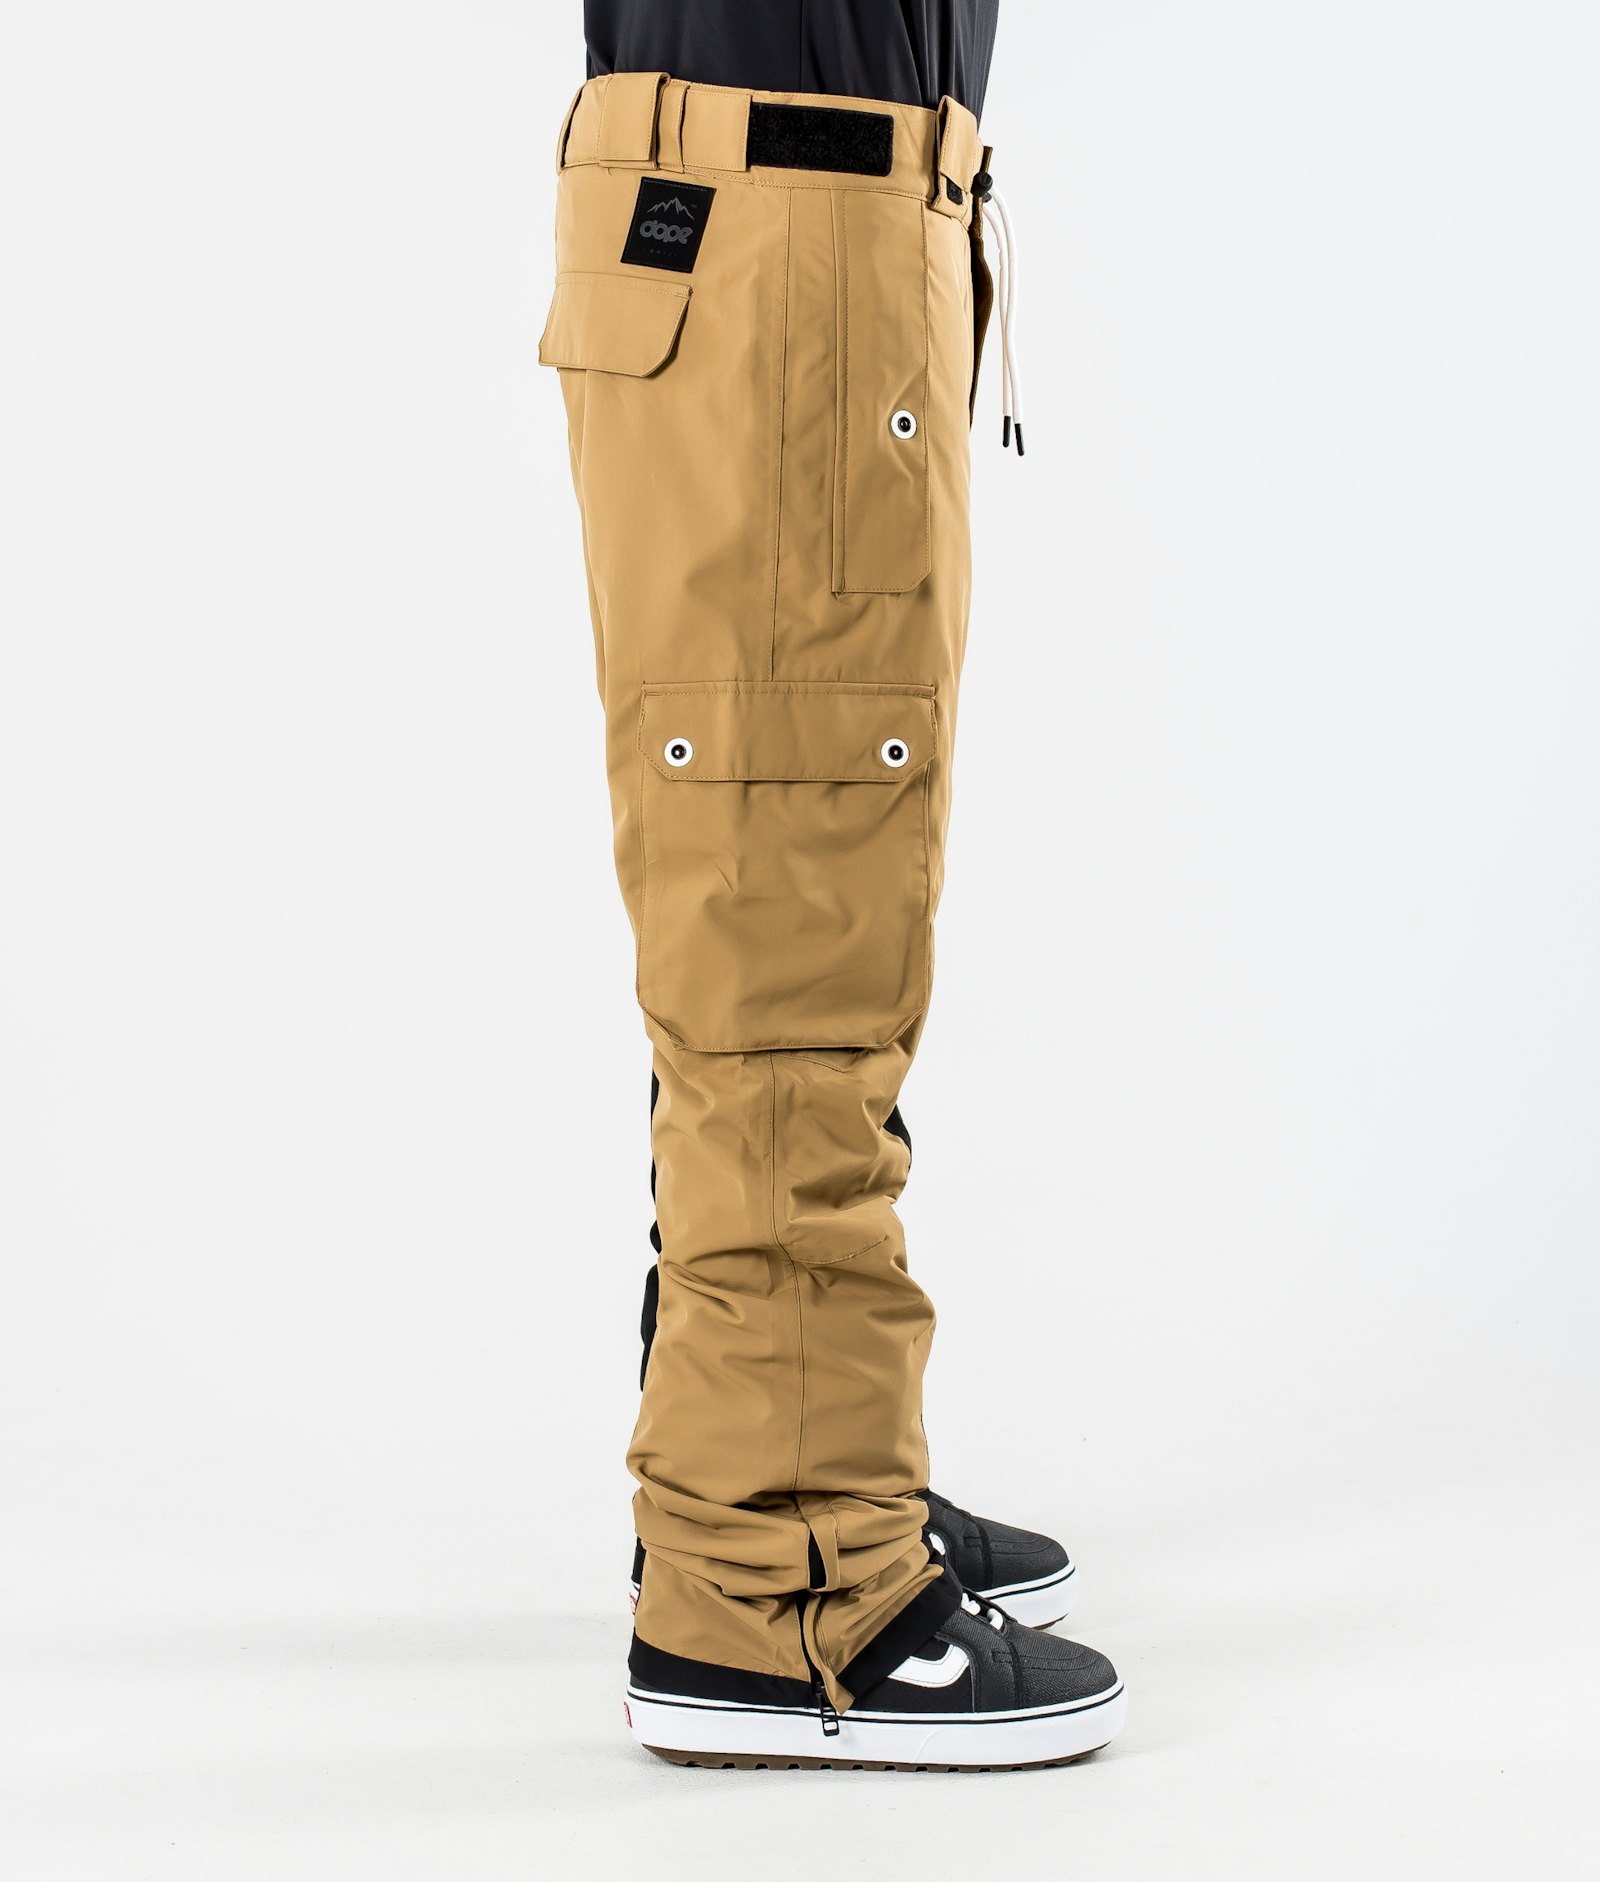 Adept 2020 Pantalon de Snowboard Homme Gold/Black